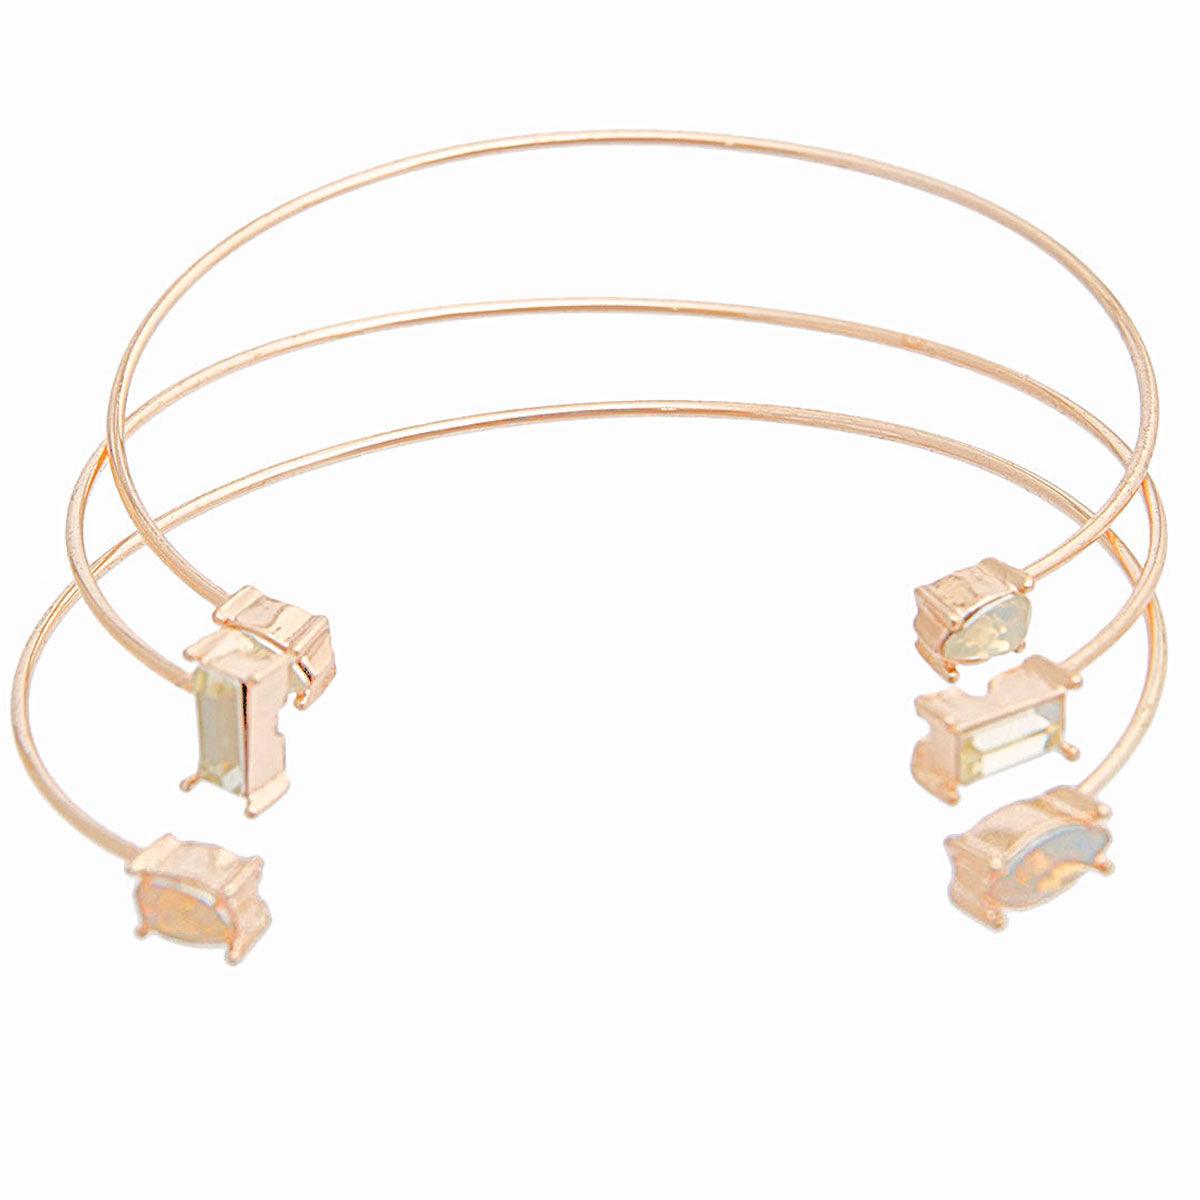 Fashion Jewelry Opal Crystal Cuff Bracelet - Elegant & Timeless